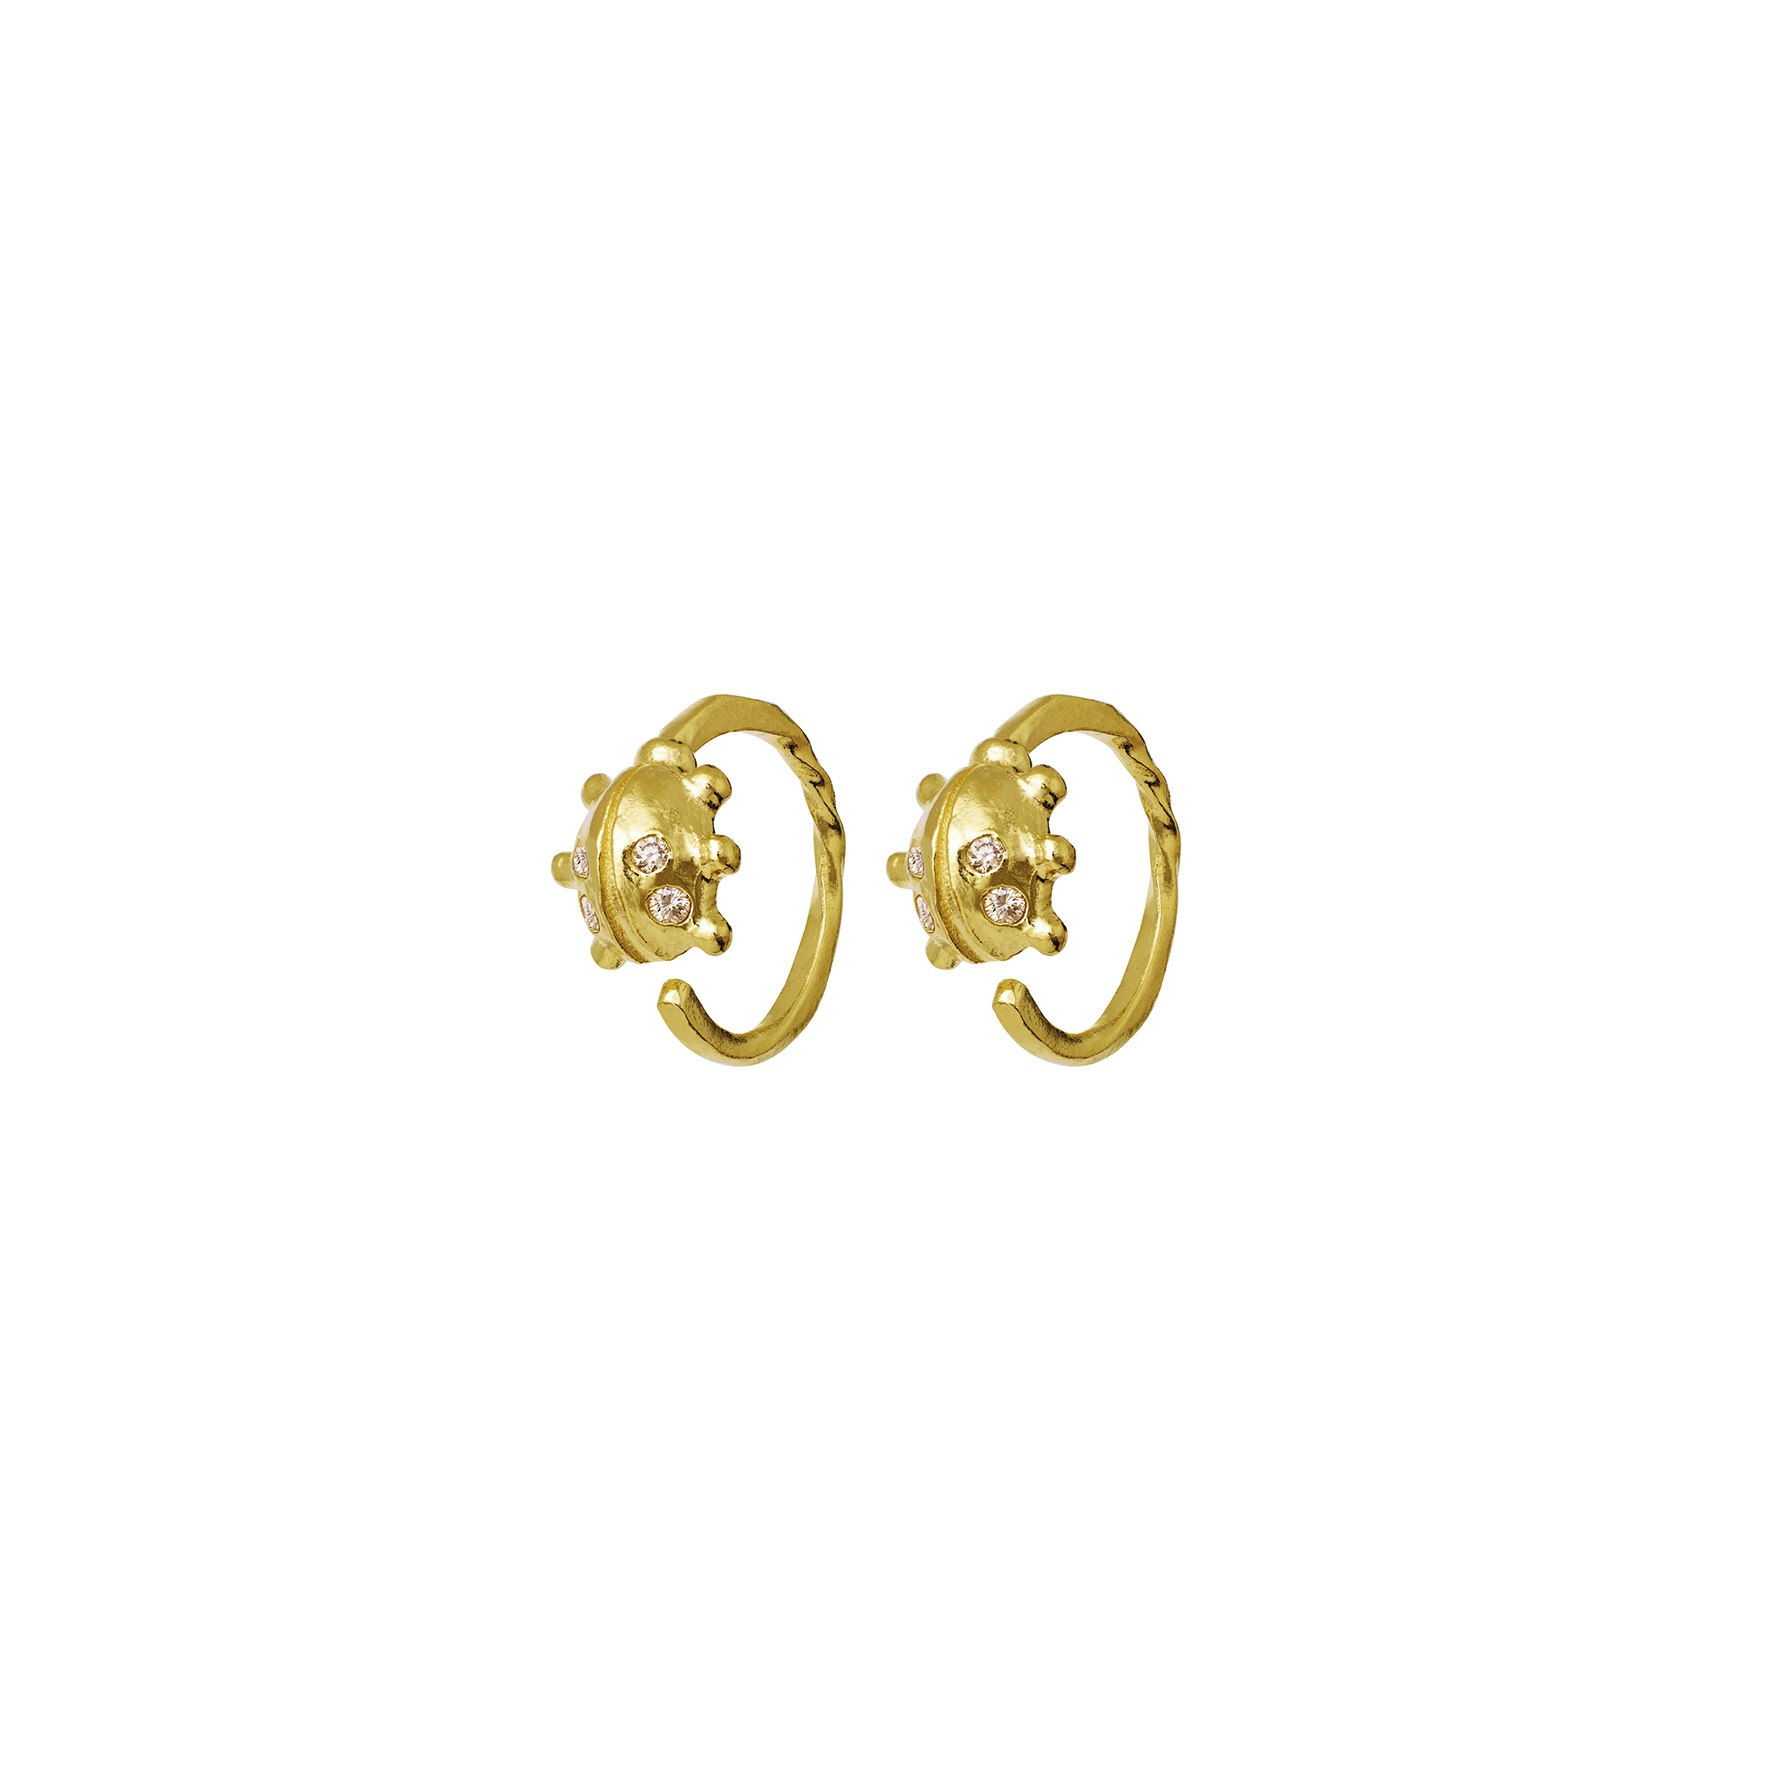 Ladybird Earrings von Maanesten in Vergoldet-Silber Sterling 925